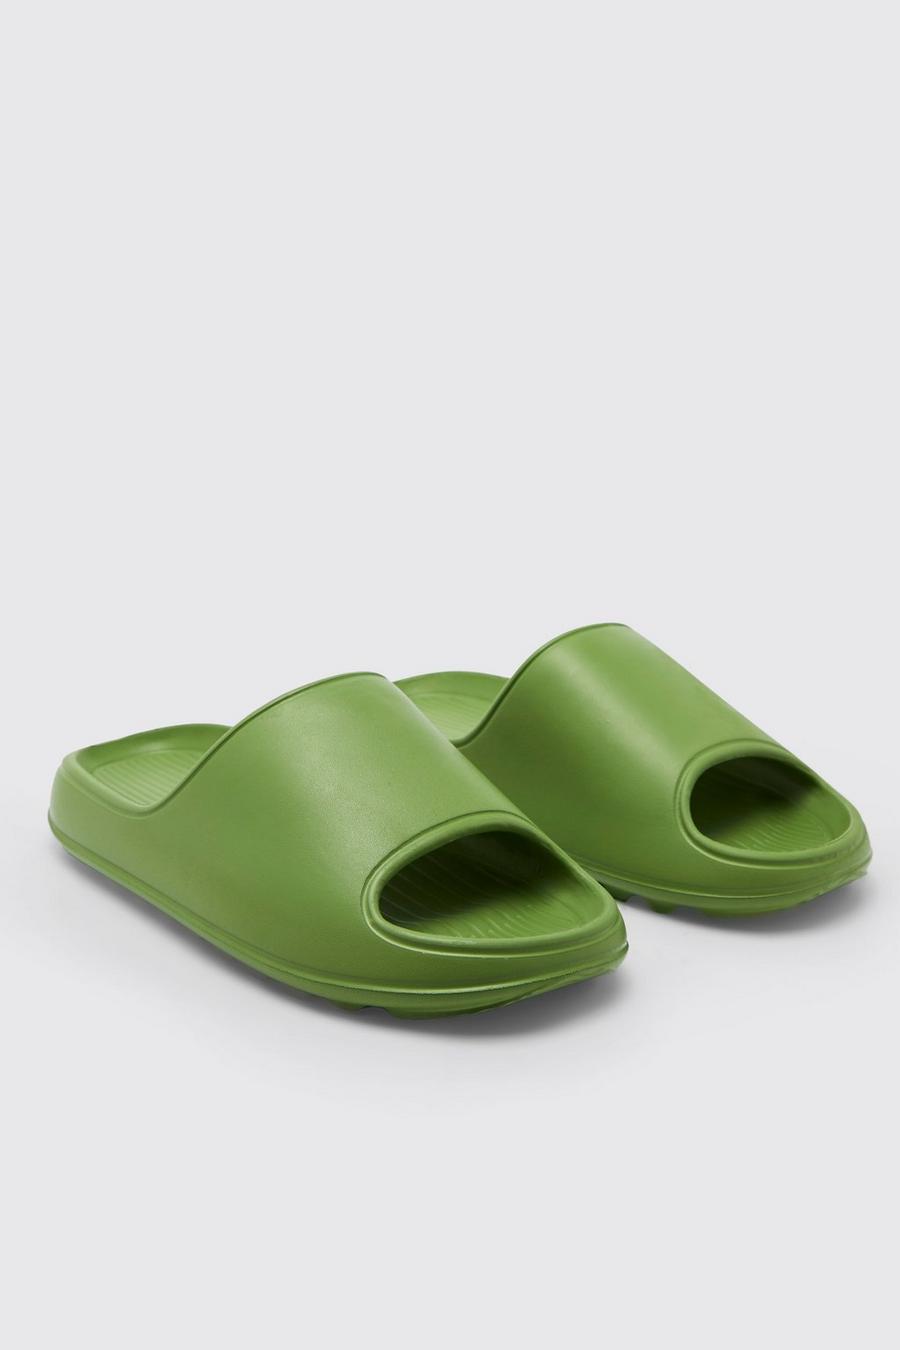 Sandalias gruesas con suela moldeada lisas, Green gerde